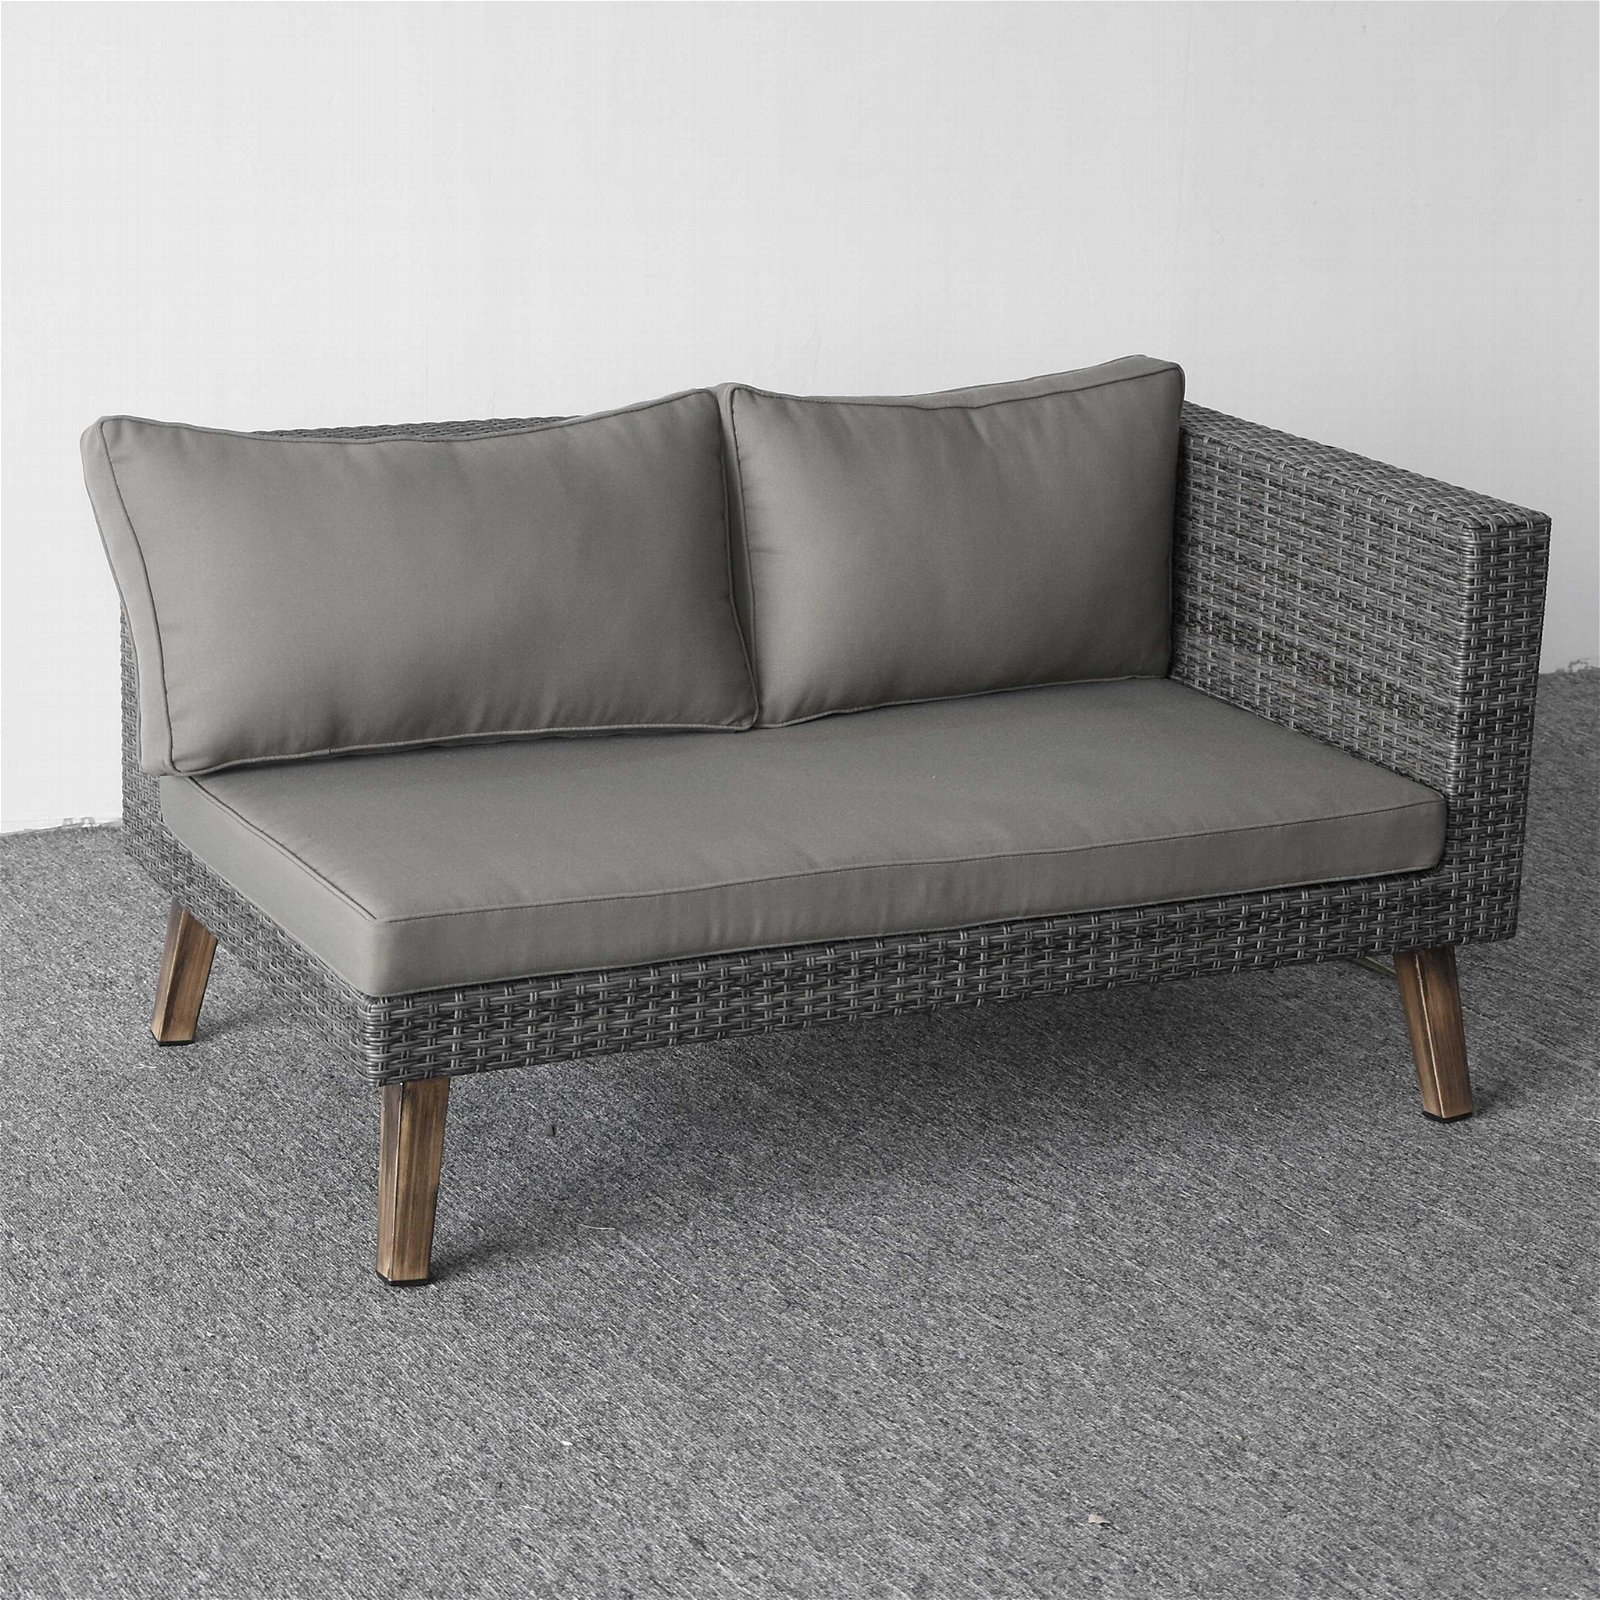 Hormel outdoor furniture wicker L shaped sectional rattan garden sofa set 4